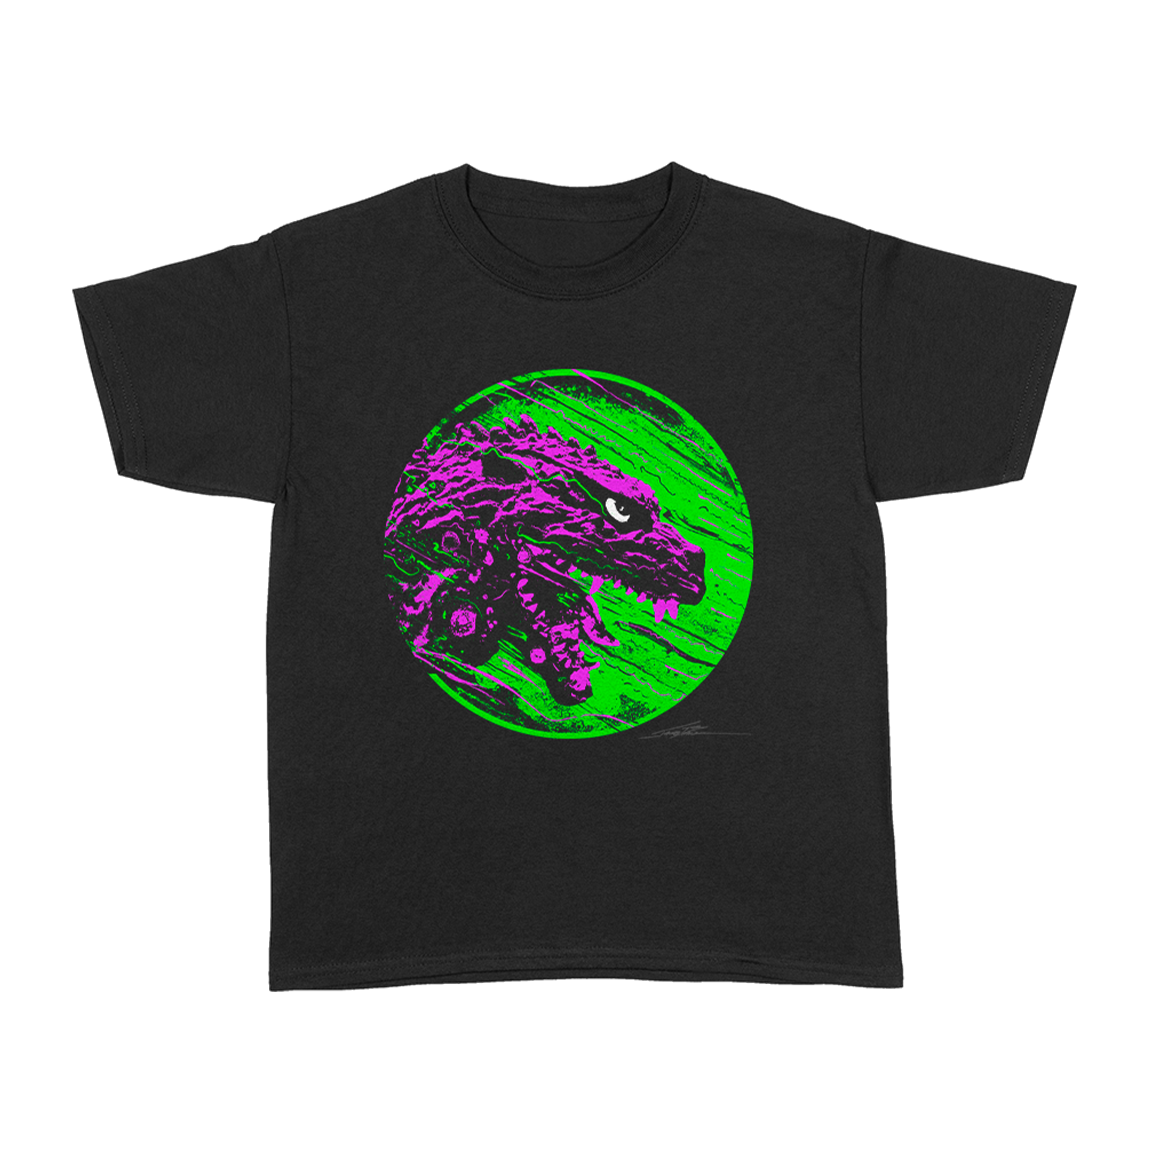 J. Bannon “Destroyer of Worlds: Purple & Green” Kids Black T-Shirt